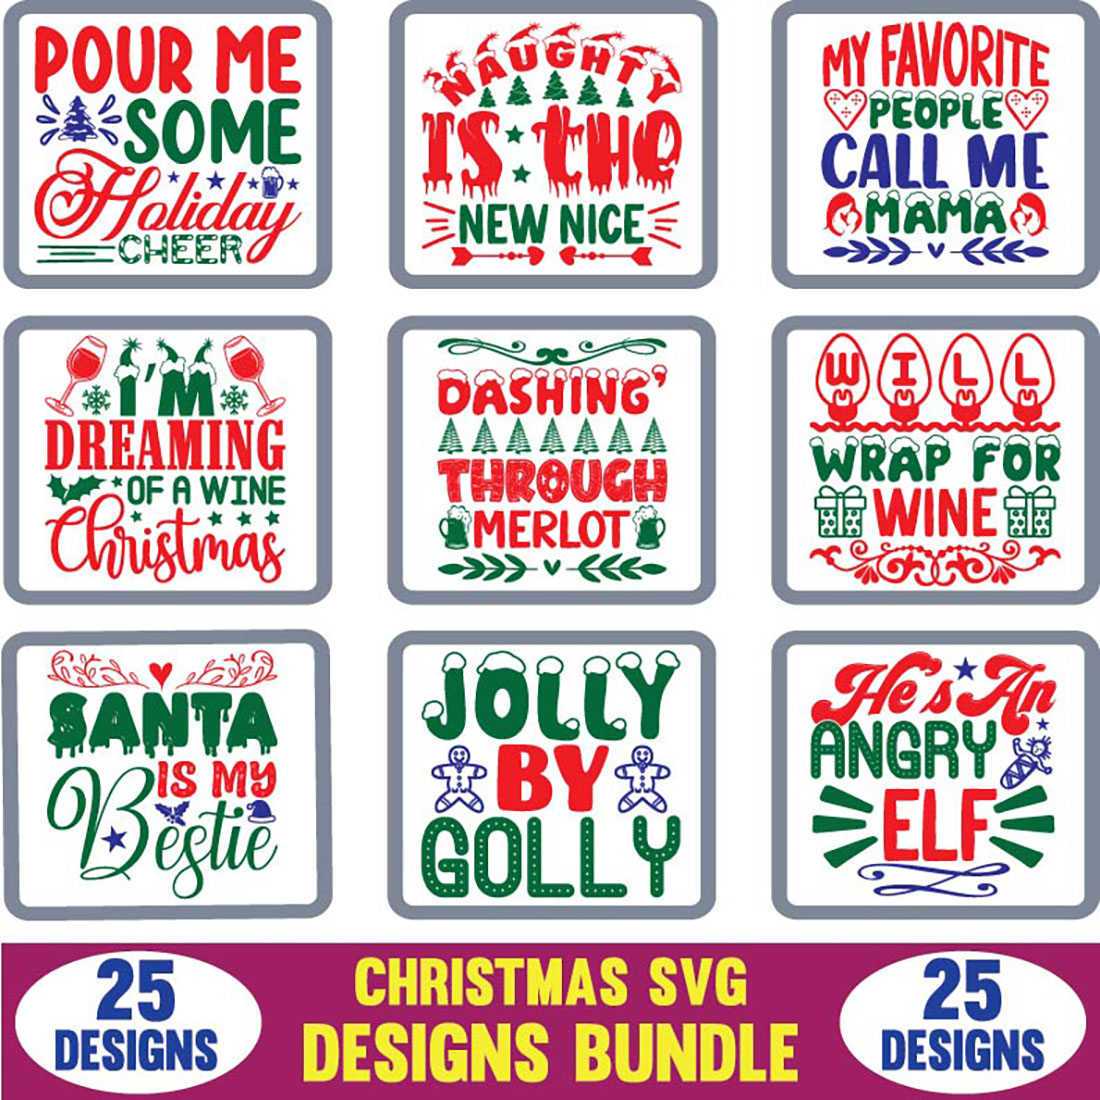 Christmas SVG Designs Bundle cover image.